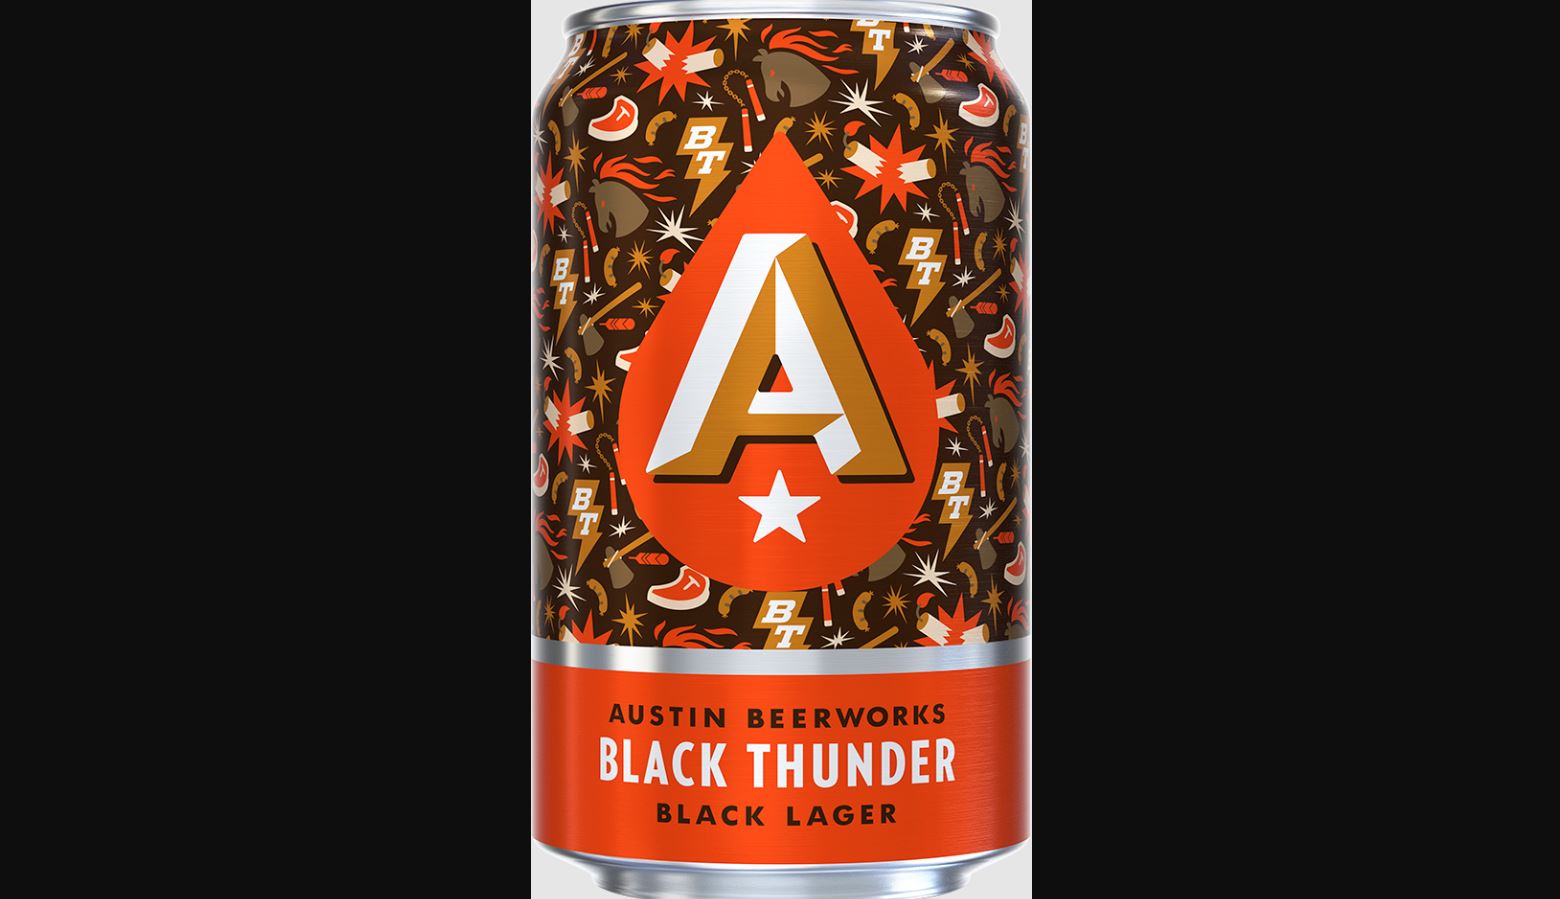 Austin Beerworks Black Thunder